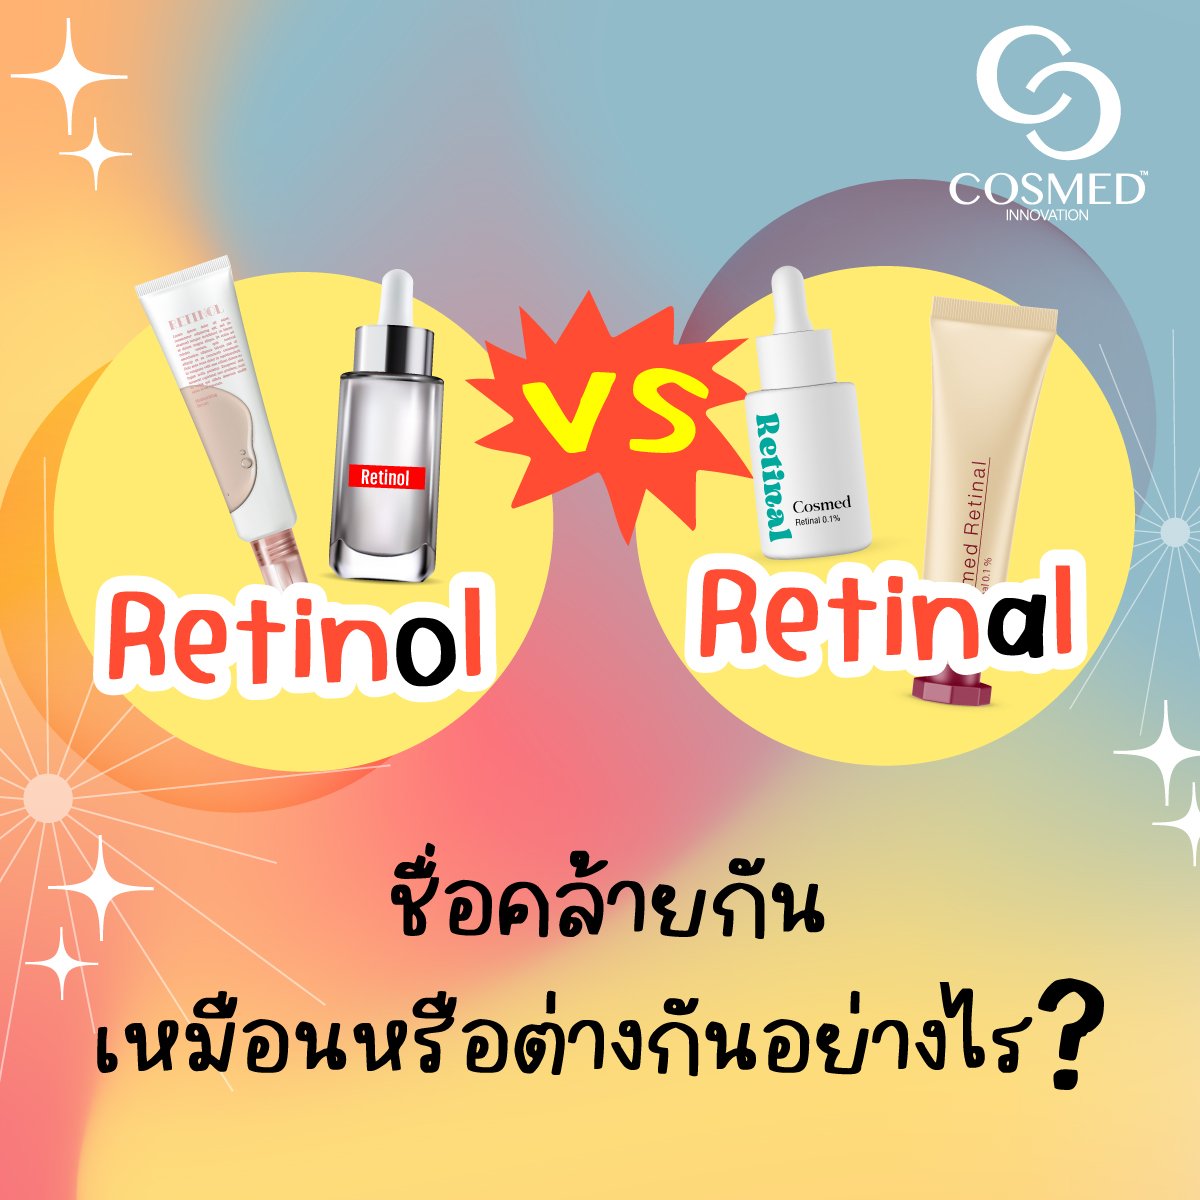 Retinol VS Retinal แตกต่างกันอย่างไร?